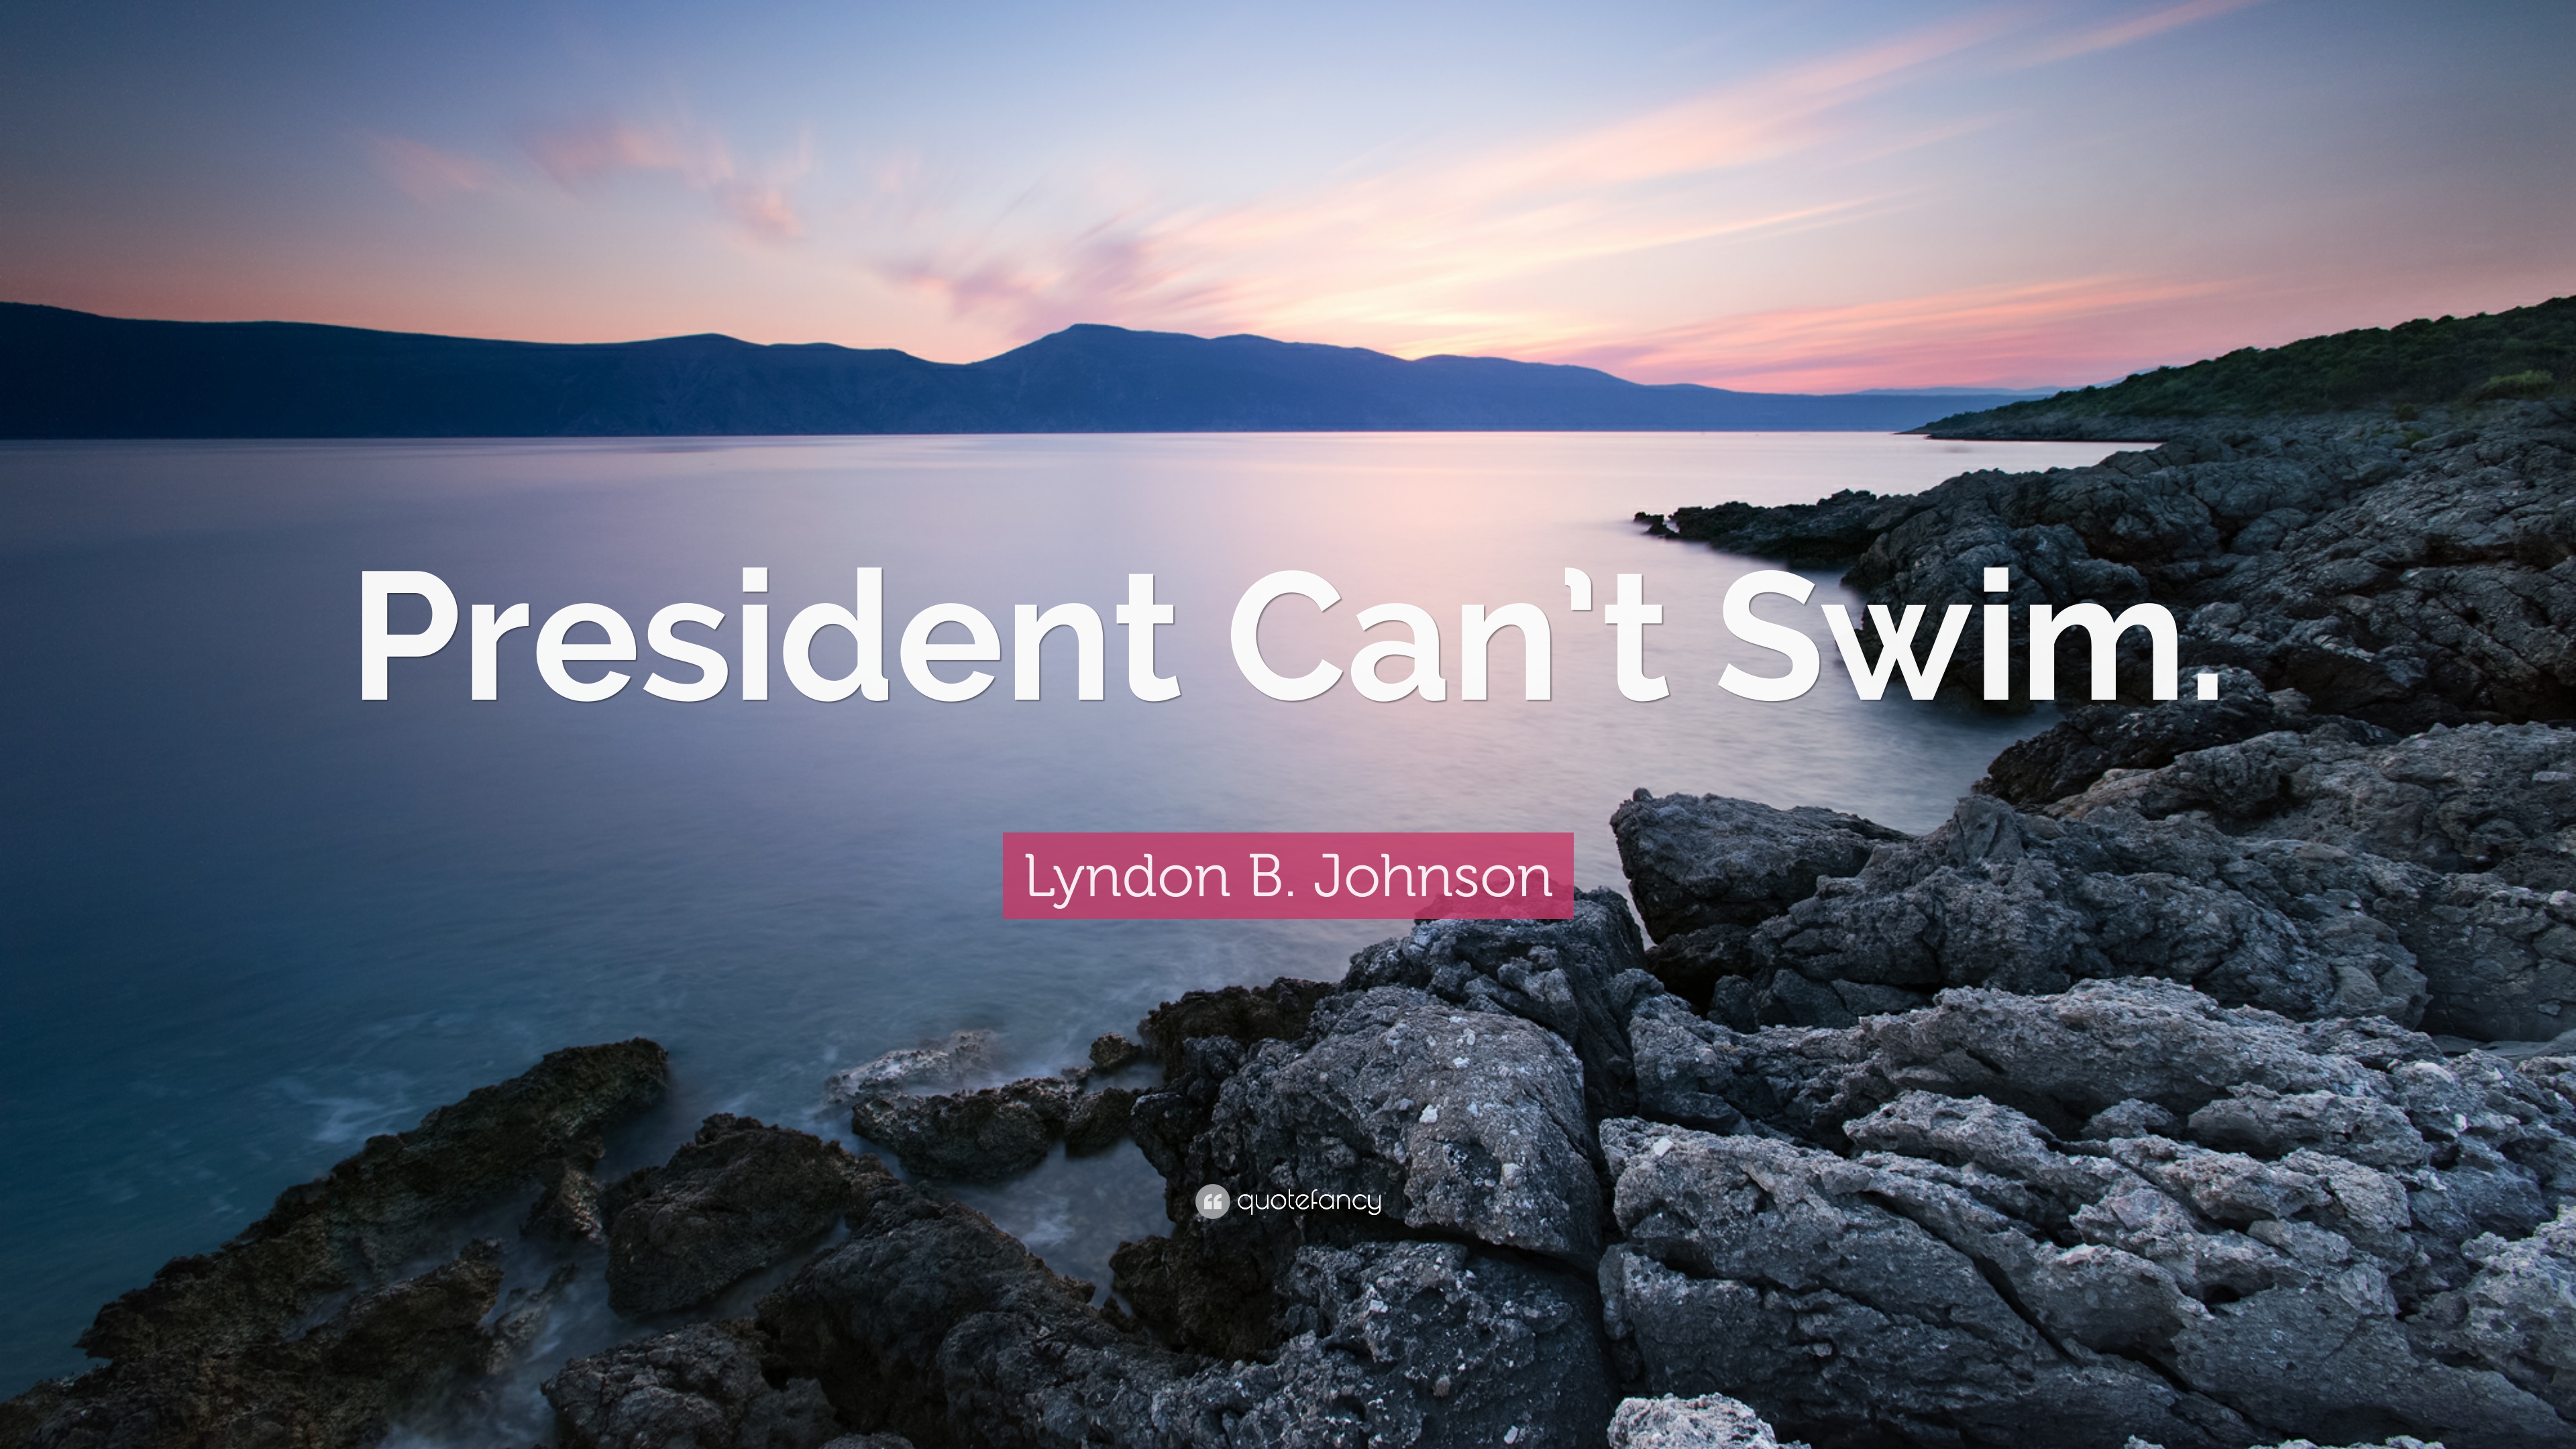 Lyndon B. Johnson Quote: “President Can't Swim.” 7 wallpaper